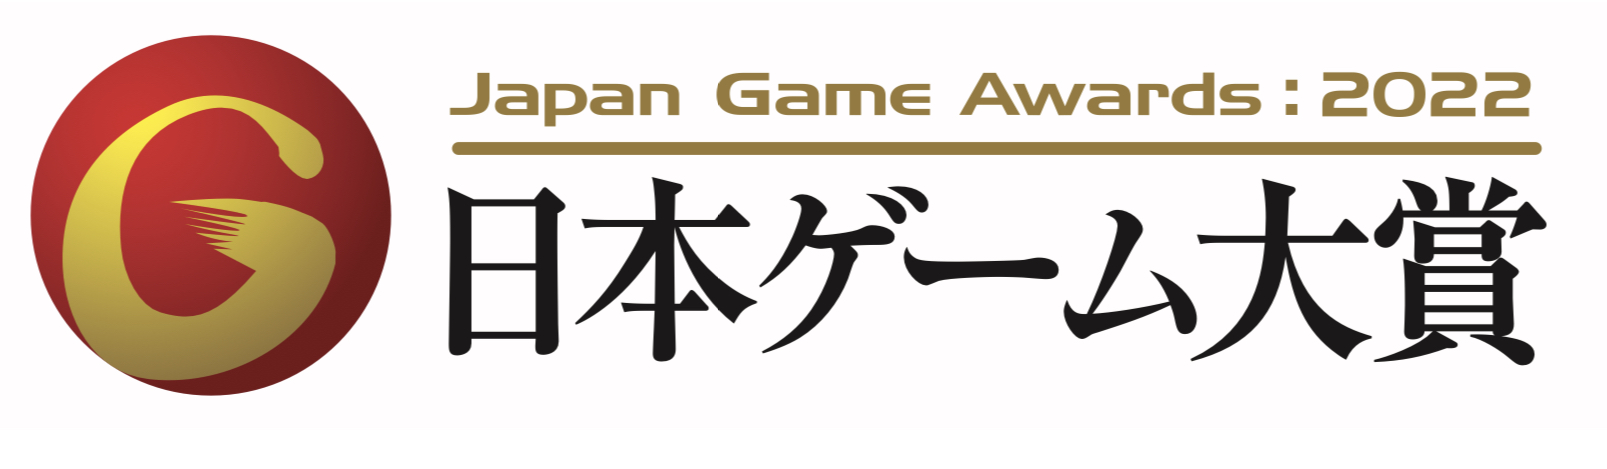 2022 Japan Game Award winners revealed